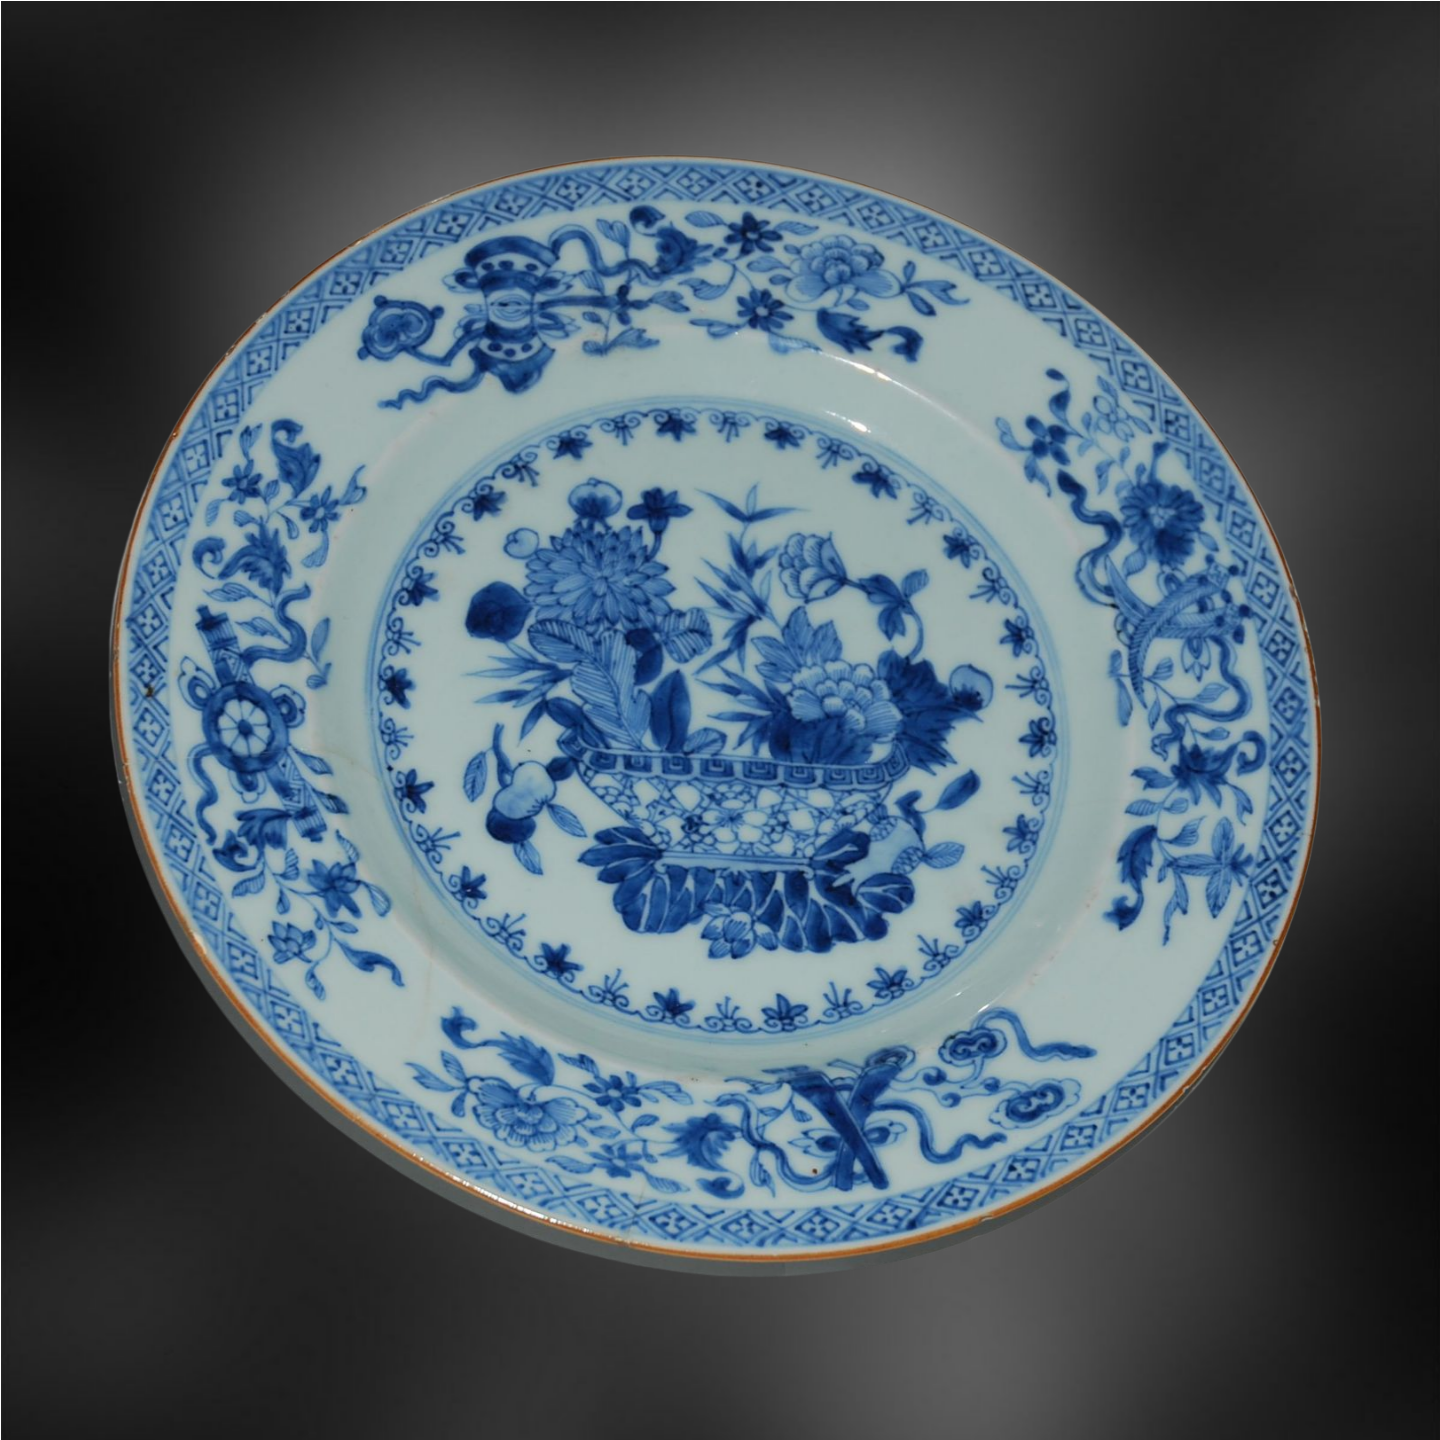 Delftware plate